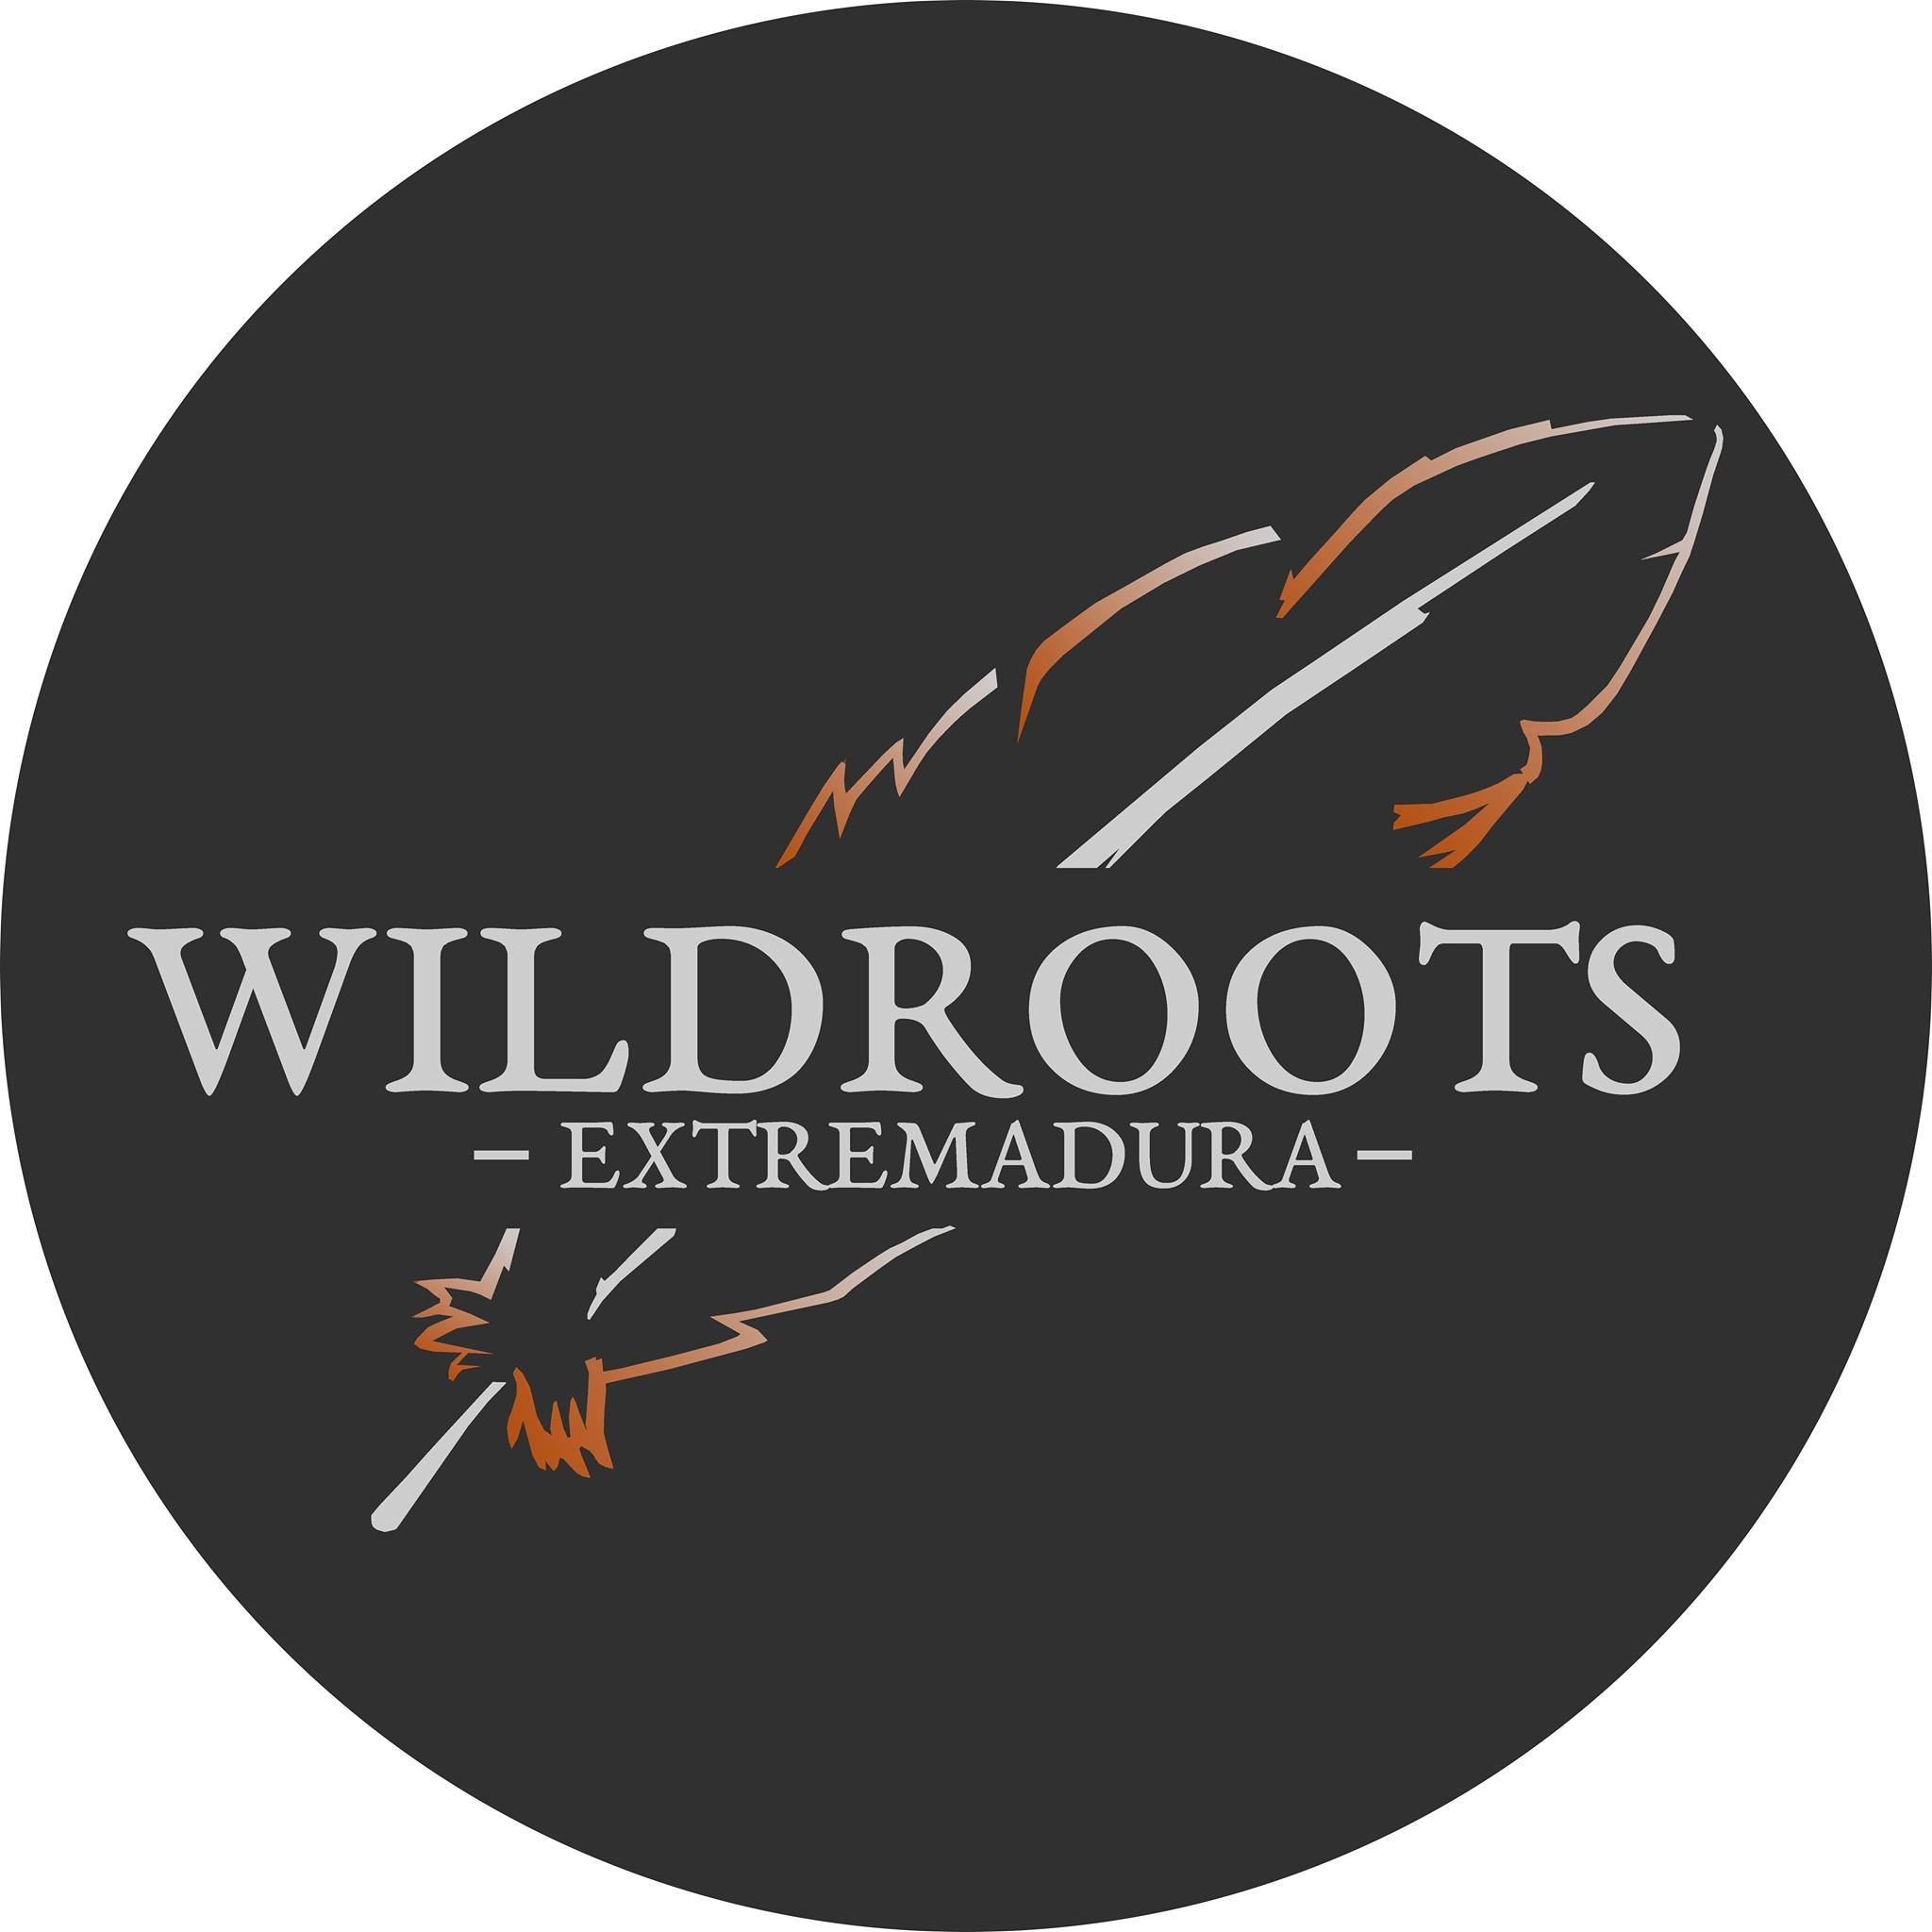 WILDROOTS EXTREMADURA